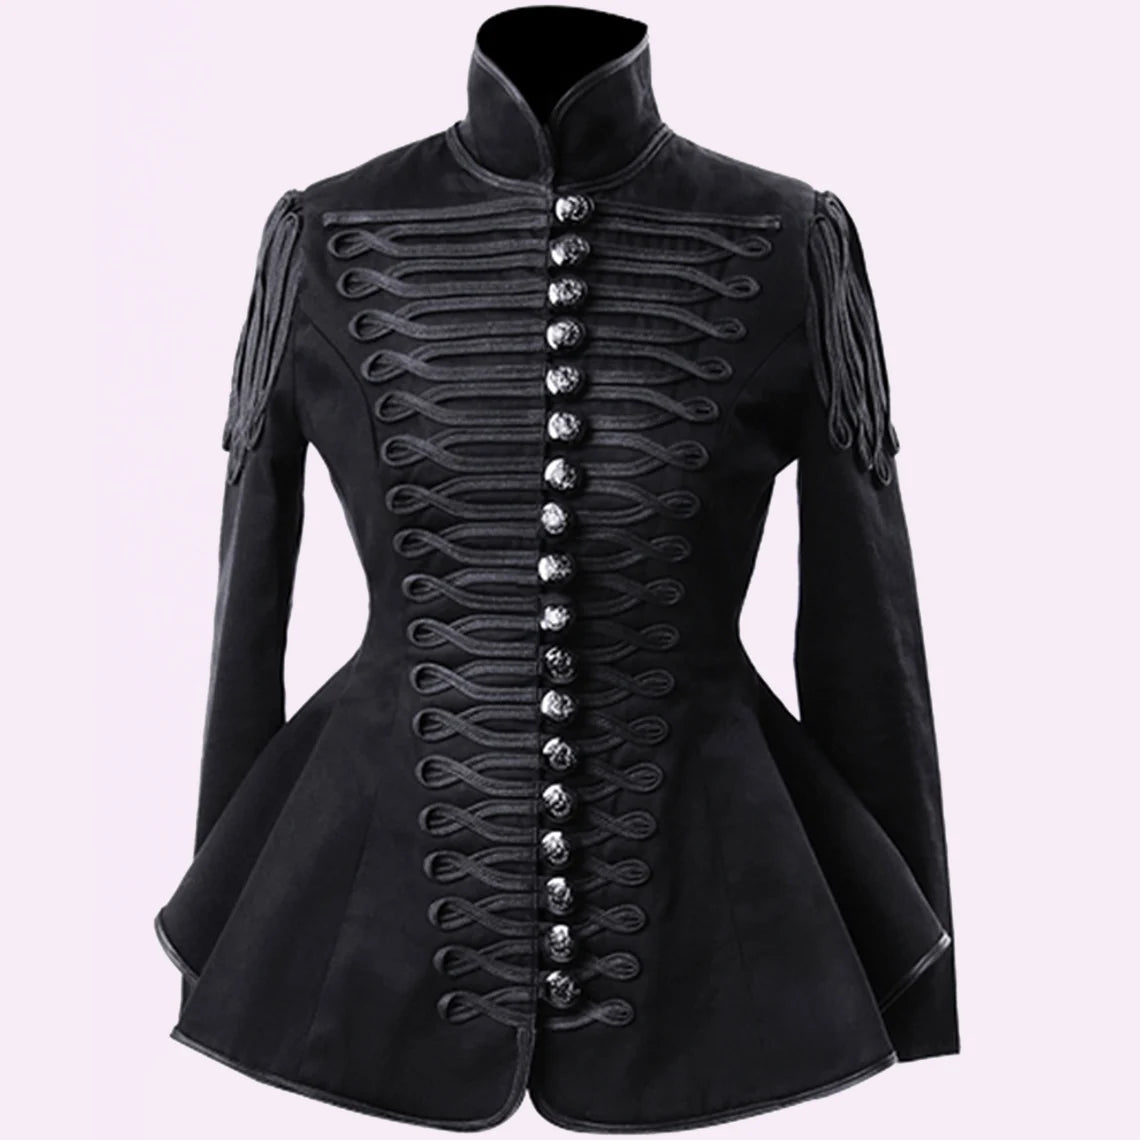 Hussar Military jacket,Ladies Fashion Military Coat